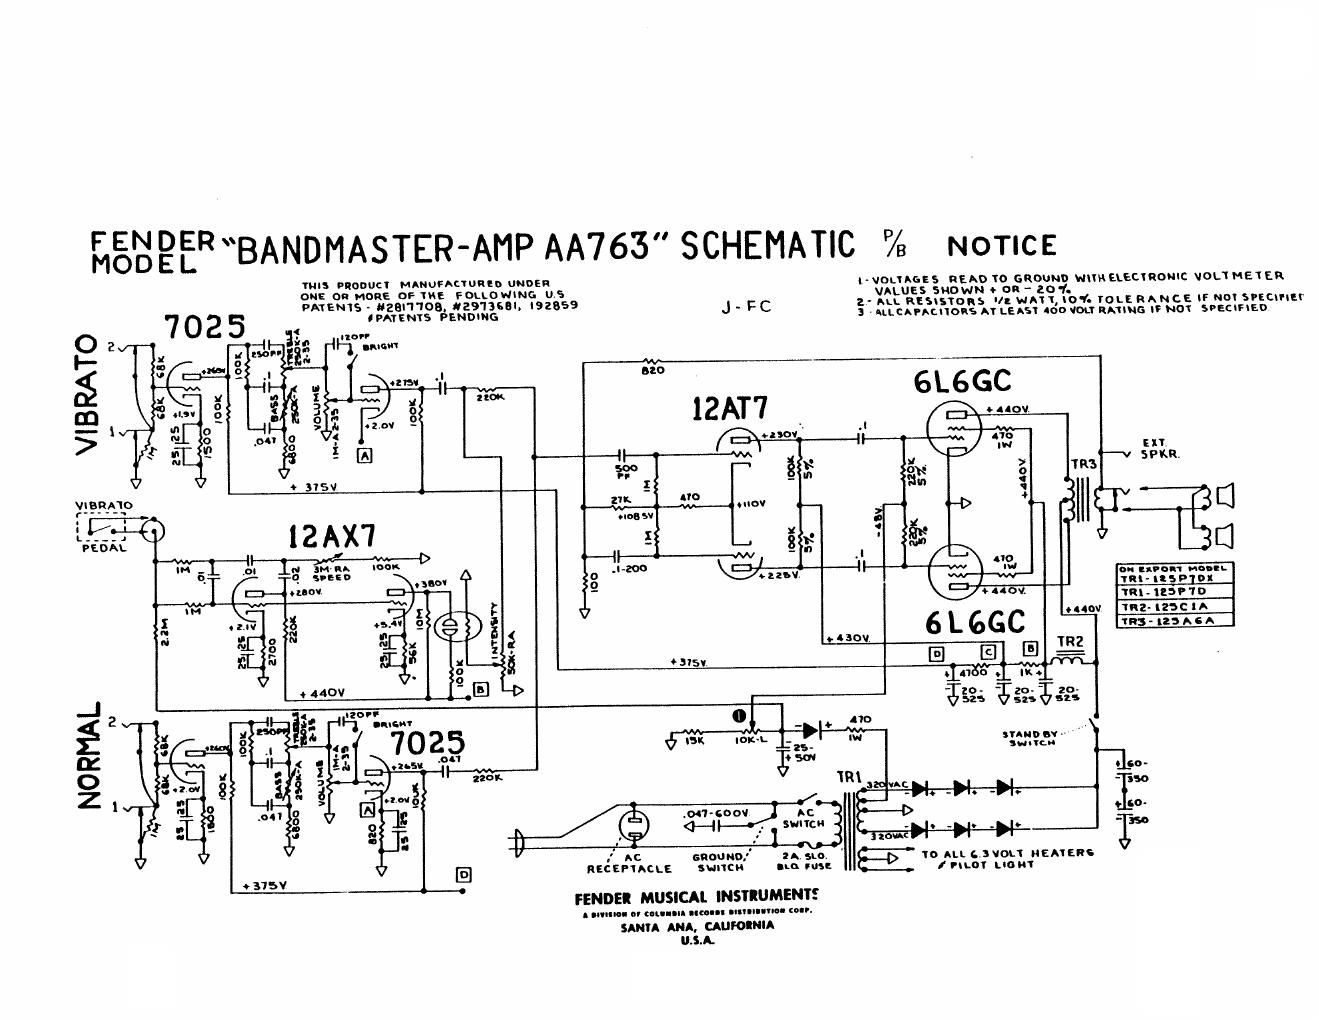 fender bandmaster aa763 schematic